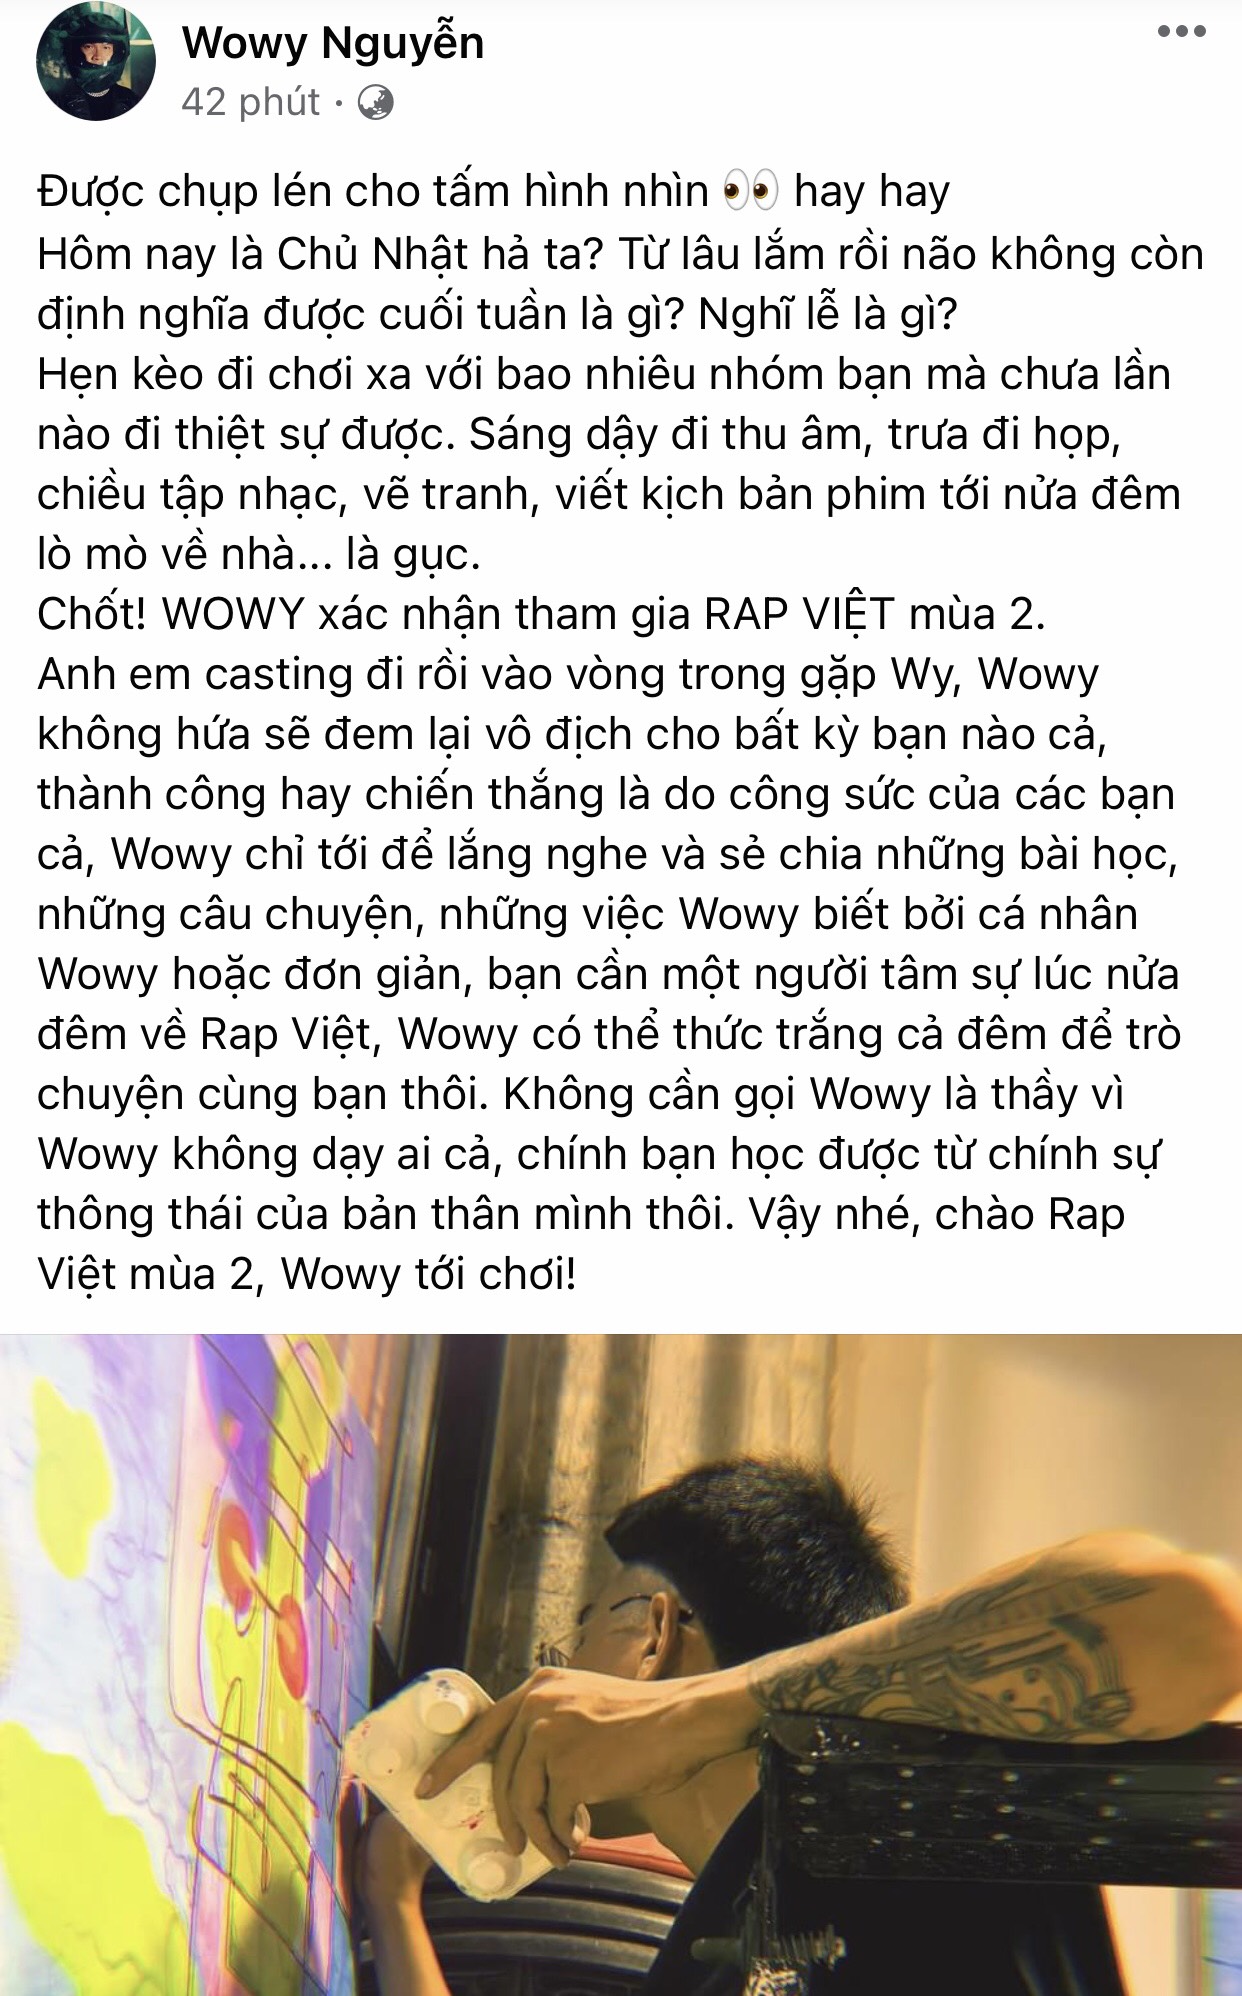 Wowy chính thức xác nhận tham gia Rap Việt mùa 2! - Ảnh 2.